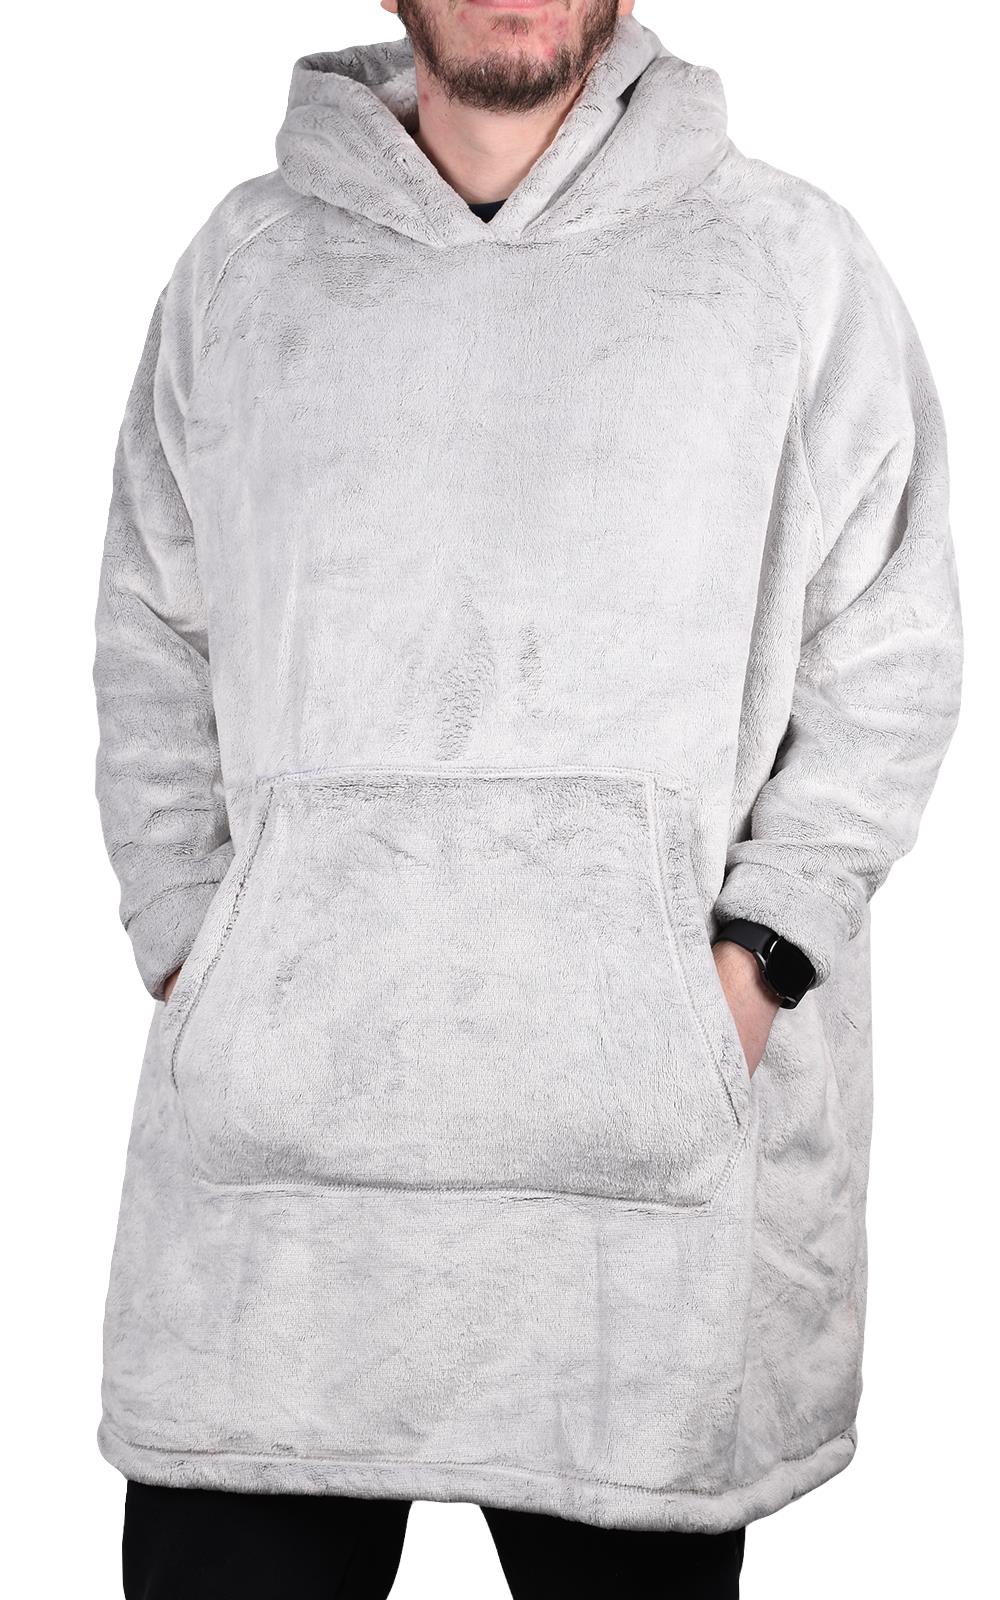 Image of Blanket Hoodie Sherpa Fleece Light Weight Grey